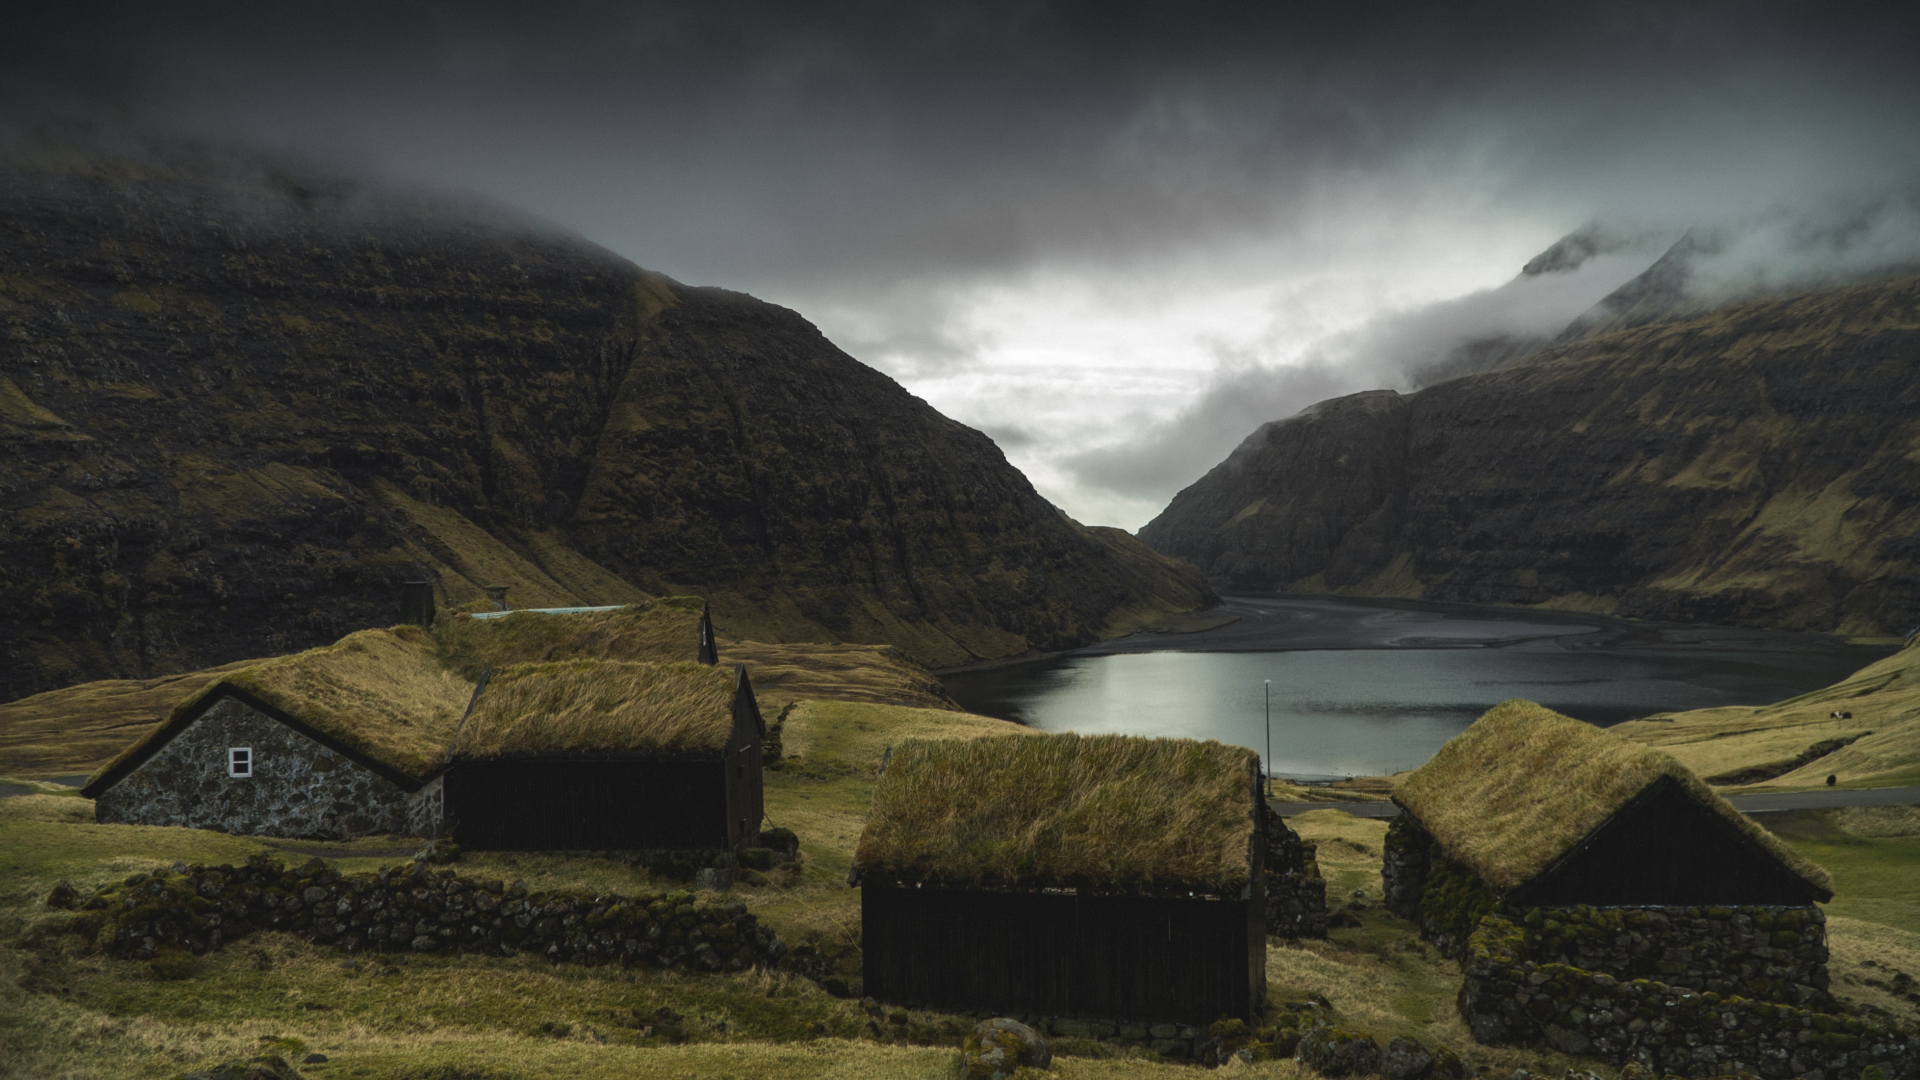 General 1920x1080 nature landscape mountains house lake clouds grass rocks Monsoon Faroe Islands